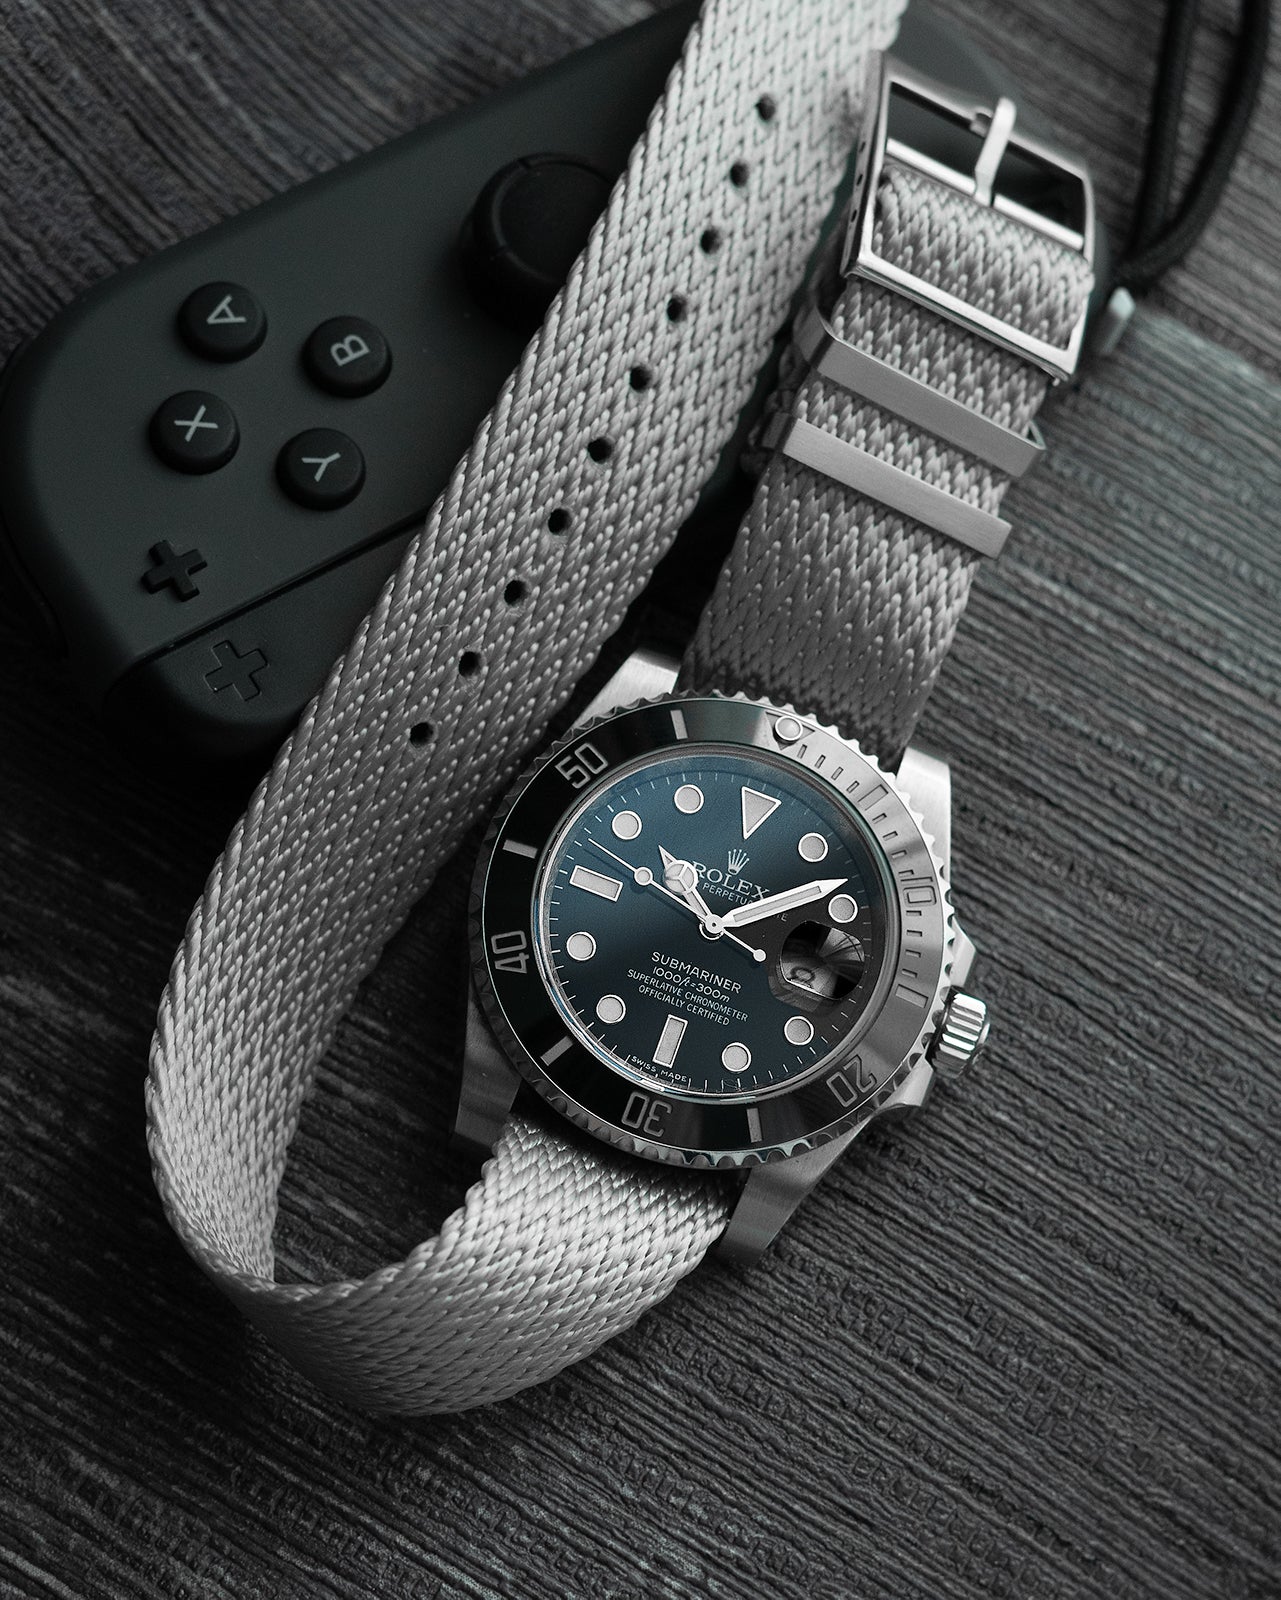 Leather bracelet adjustable - Brown w/black stripe – Shop with a Mission